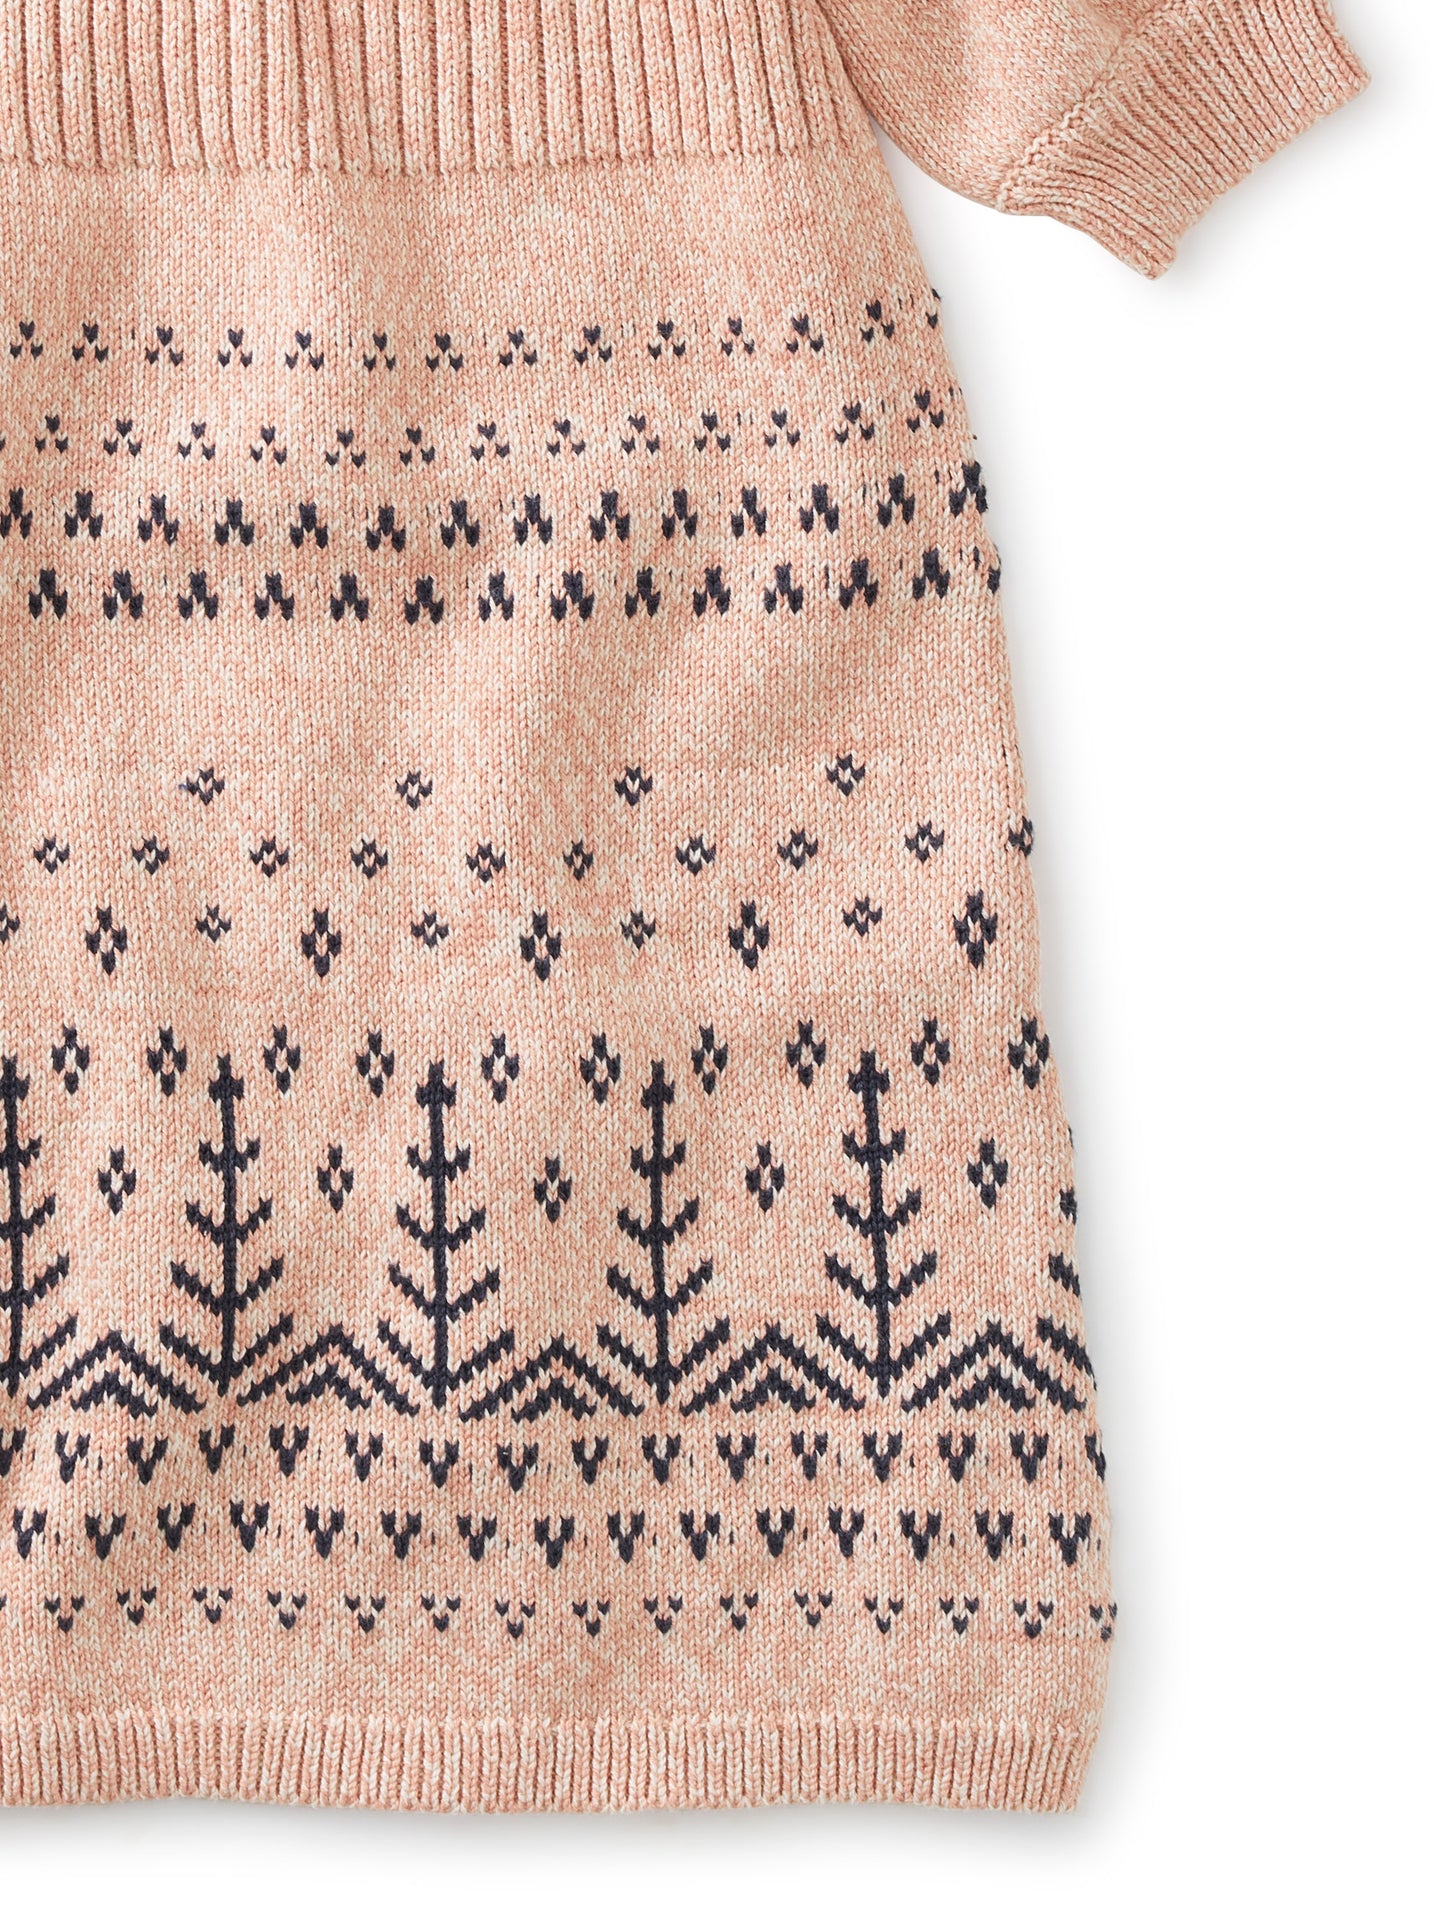 Cozy Sweater Dress: Dusty Coral